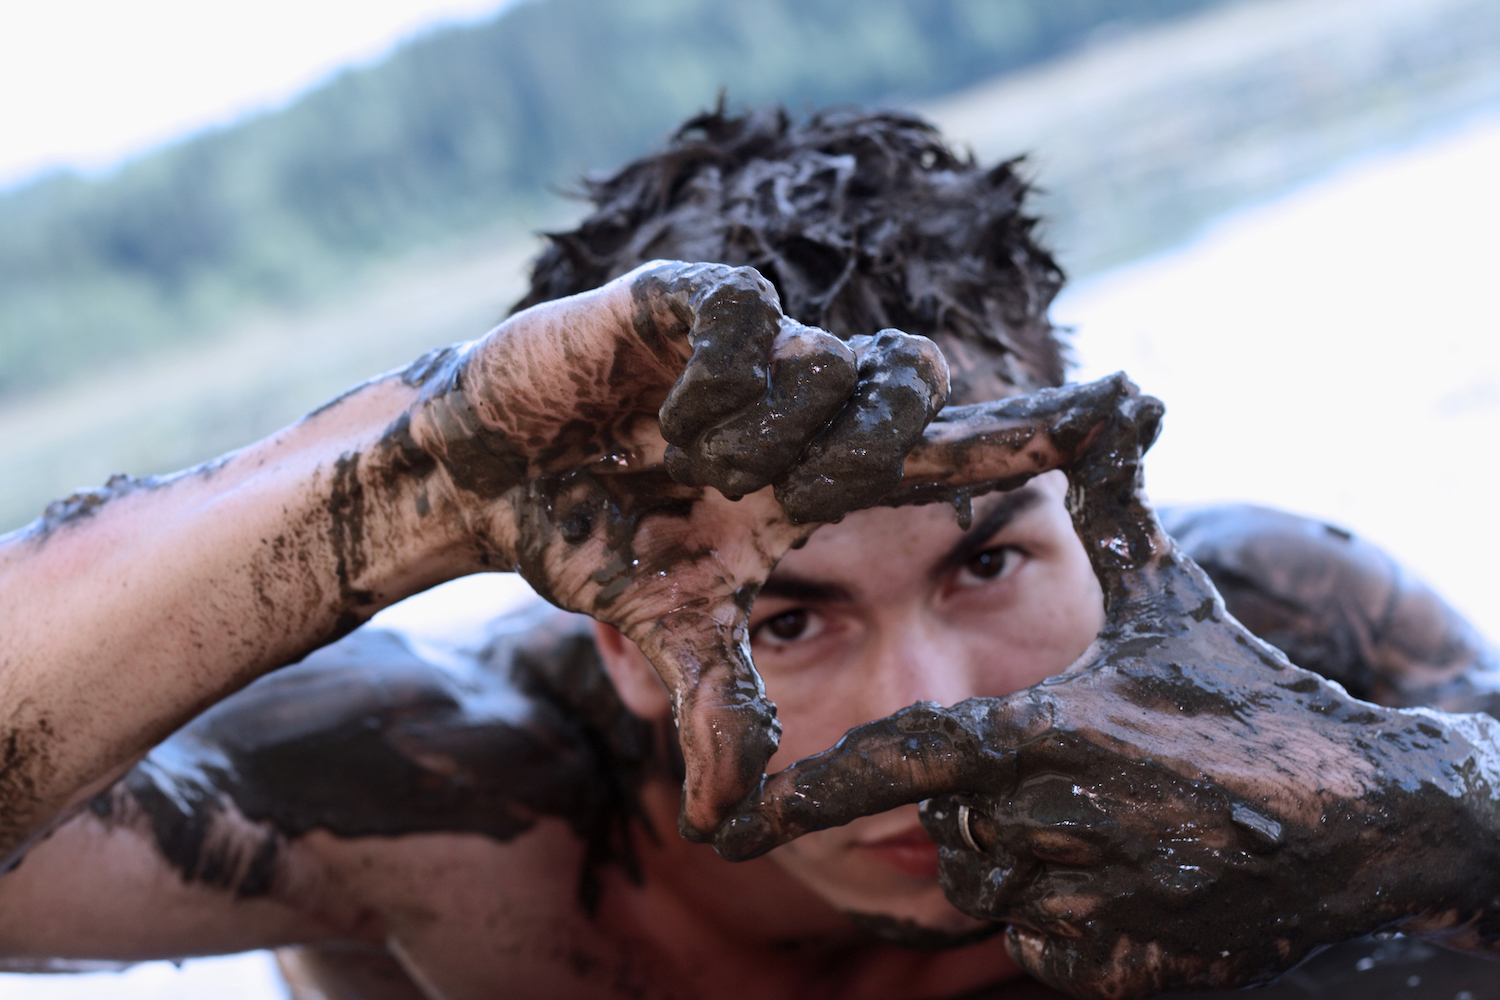 Teen boy in mud